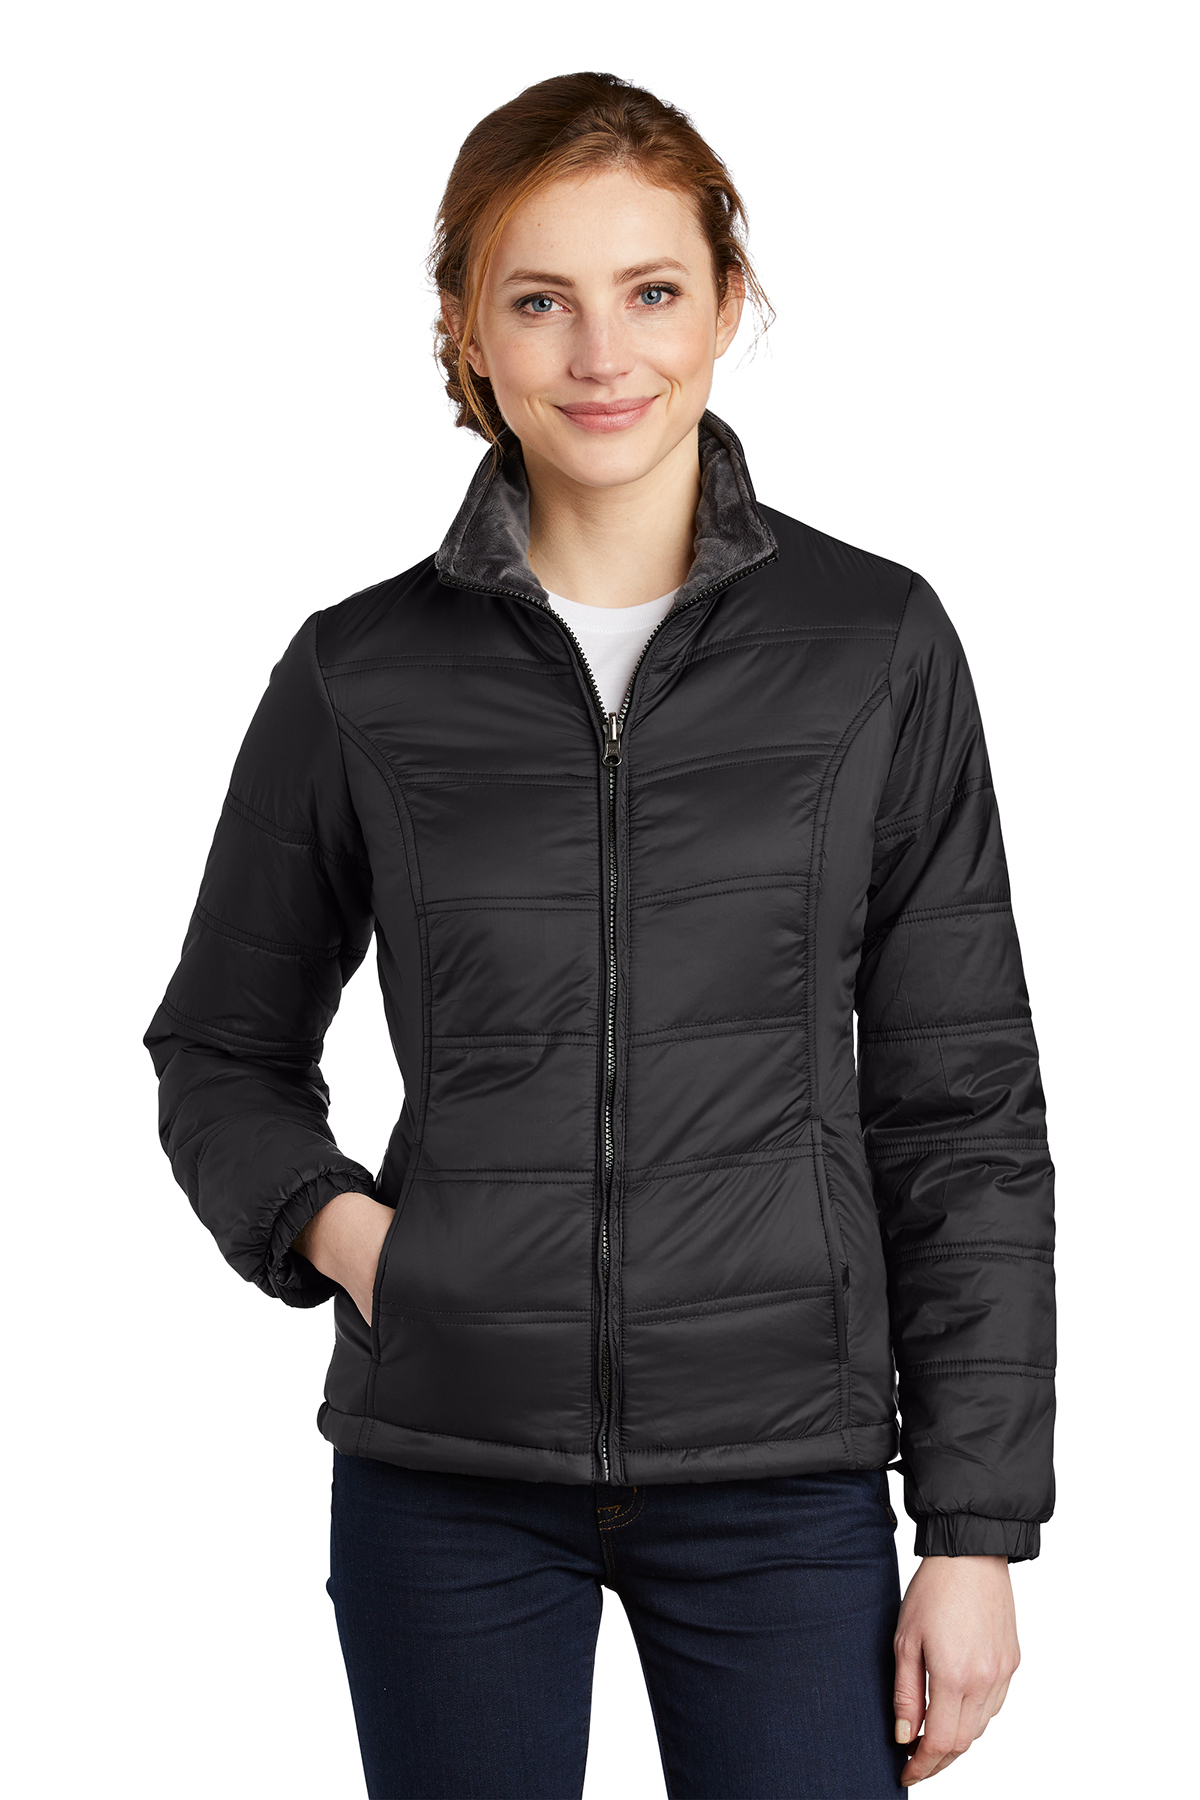 Port Authority Ladies Colorblock 3-in-1 Jacket | Product | SanMar